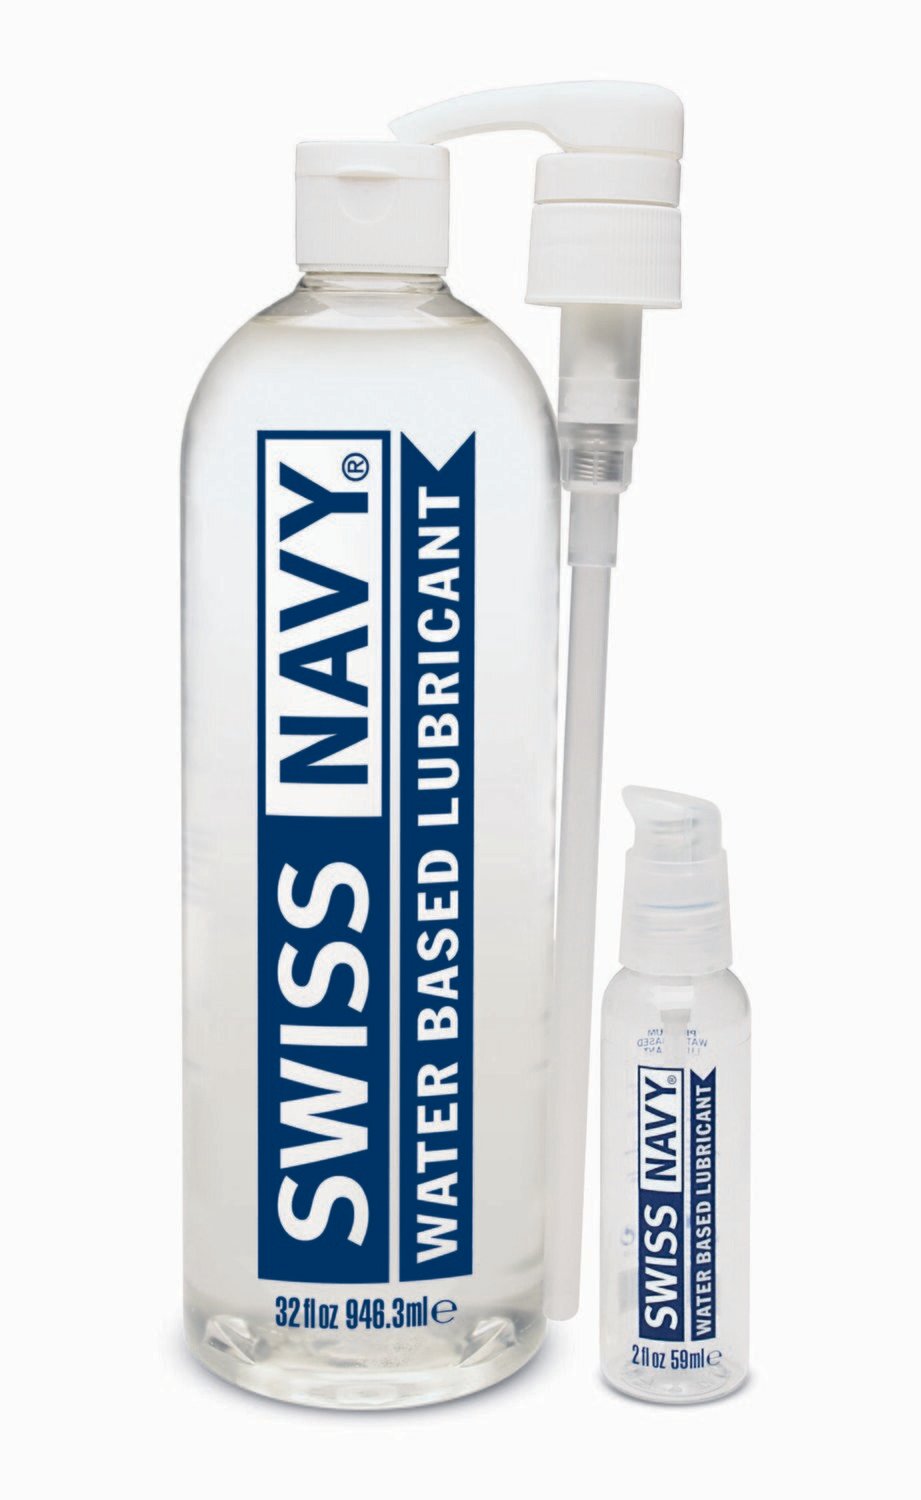 Swiss Navy - Water Based Lubricant - 32oz/946mL